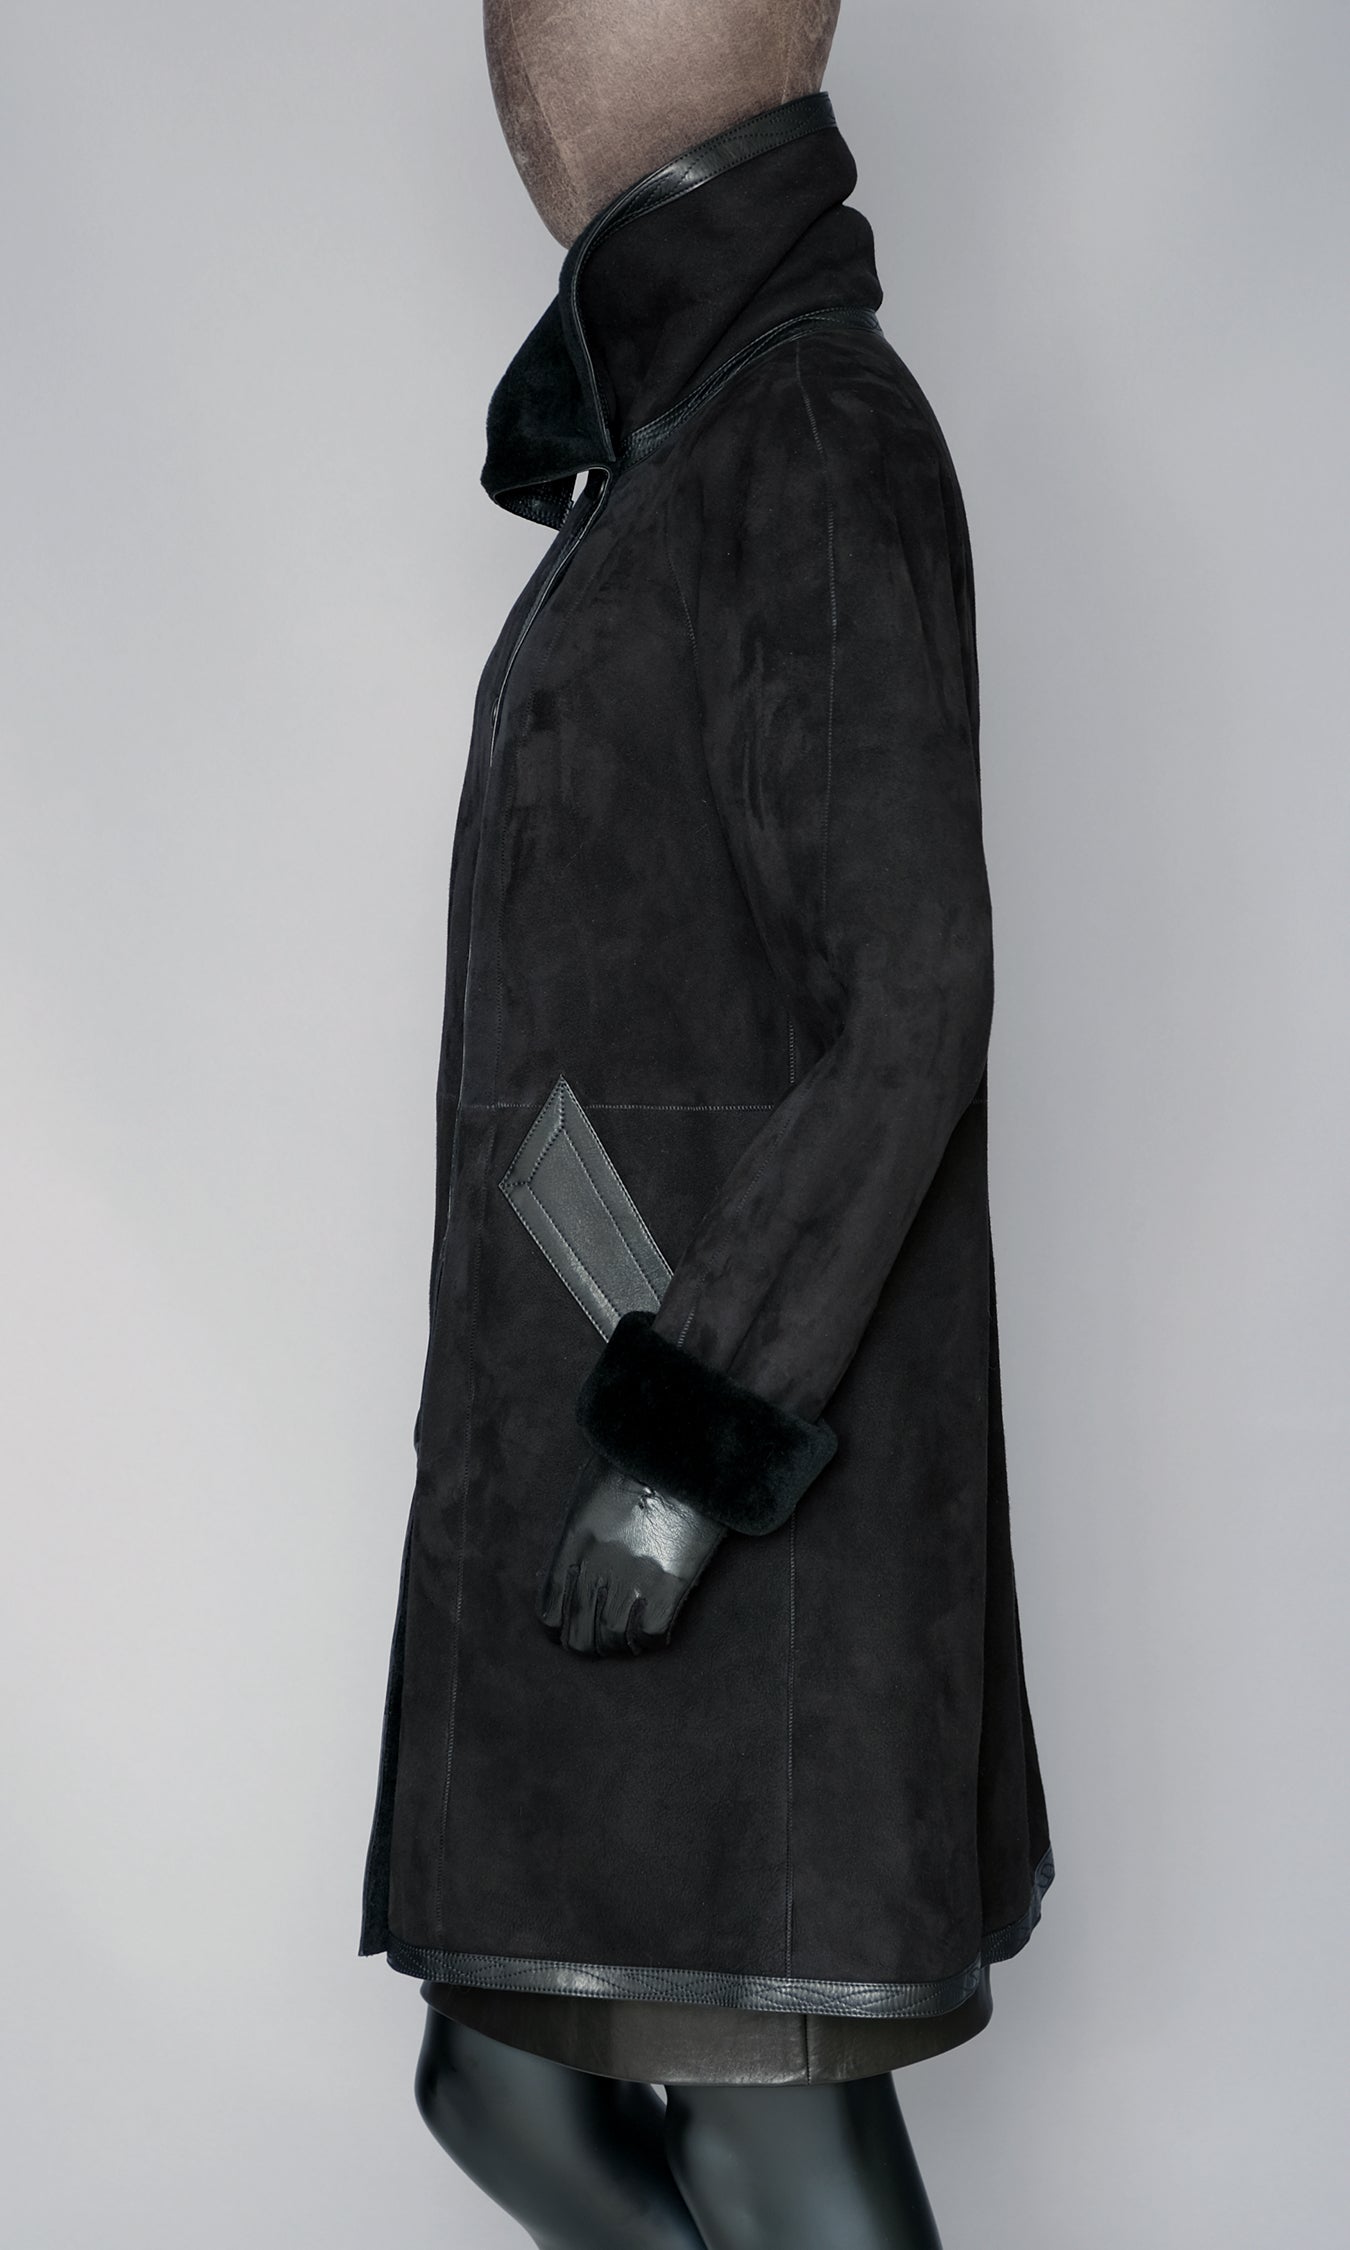 Black Shearling Coat size small 8